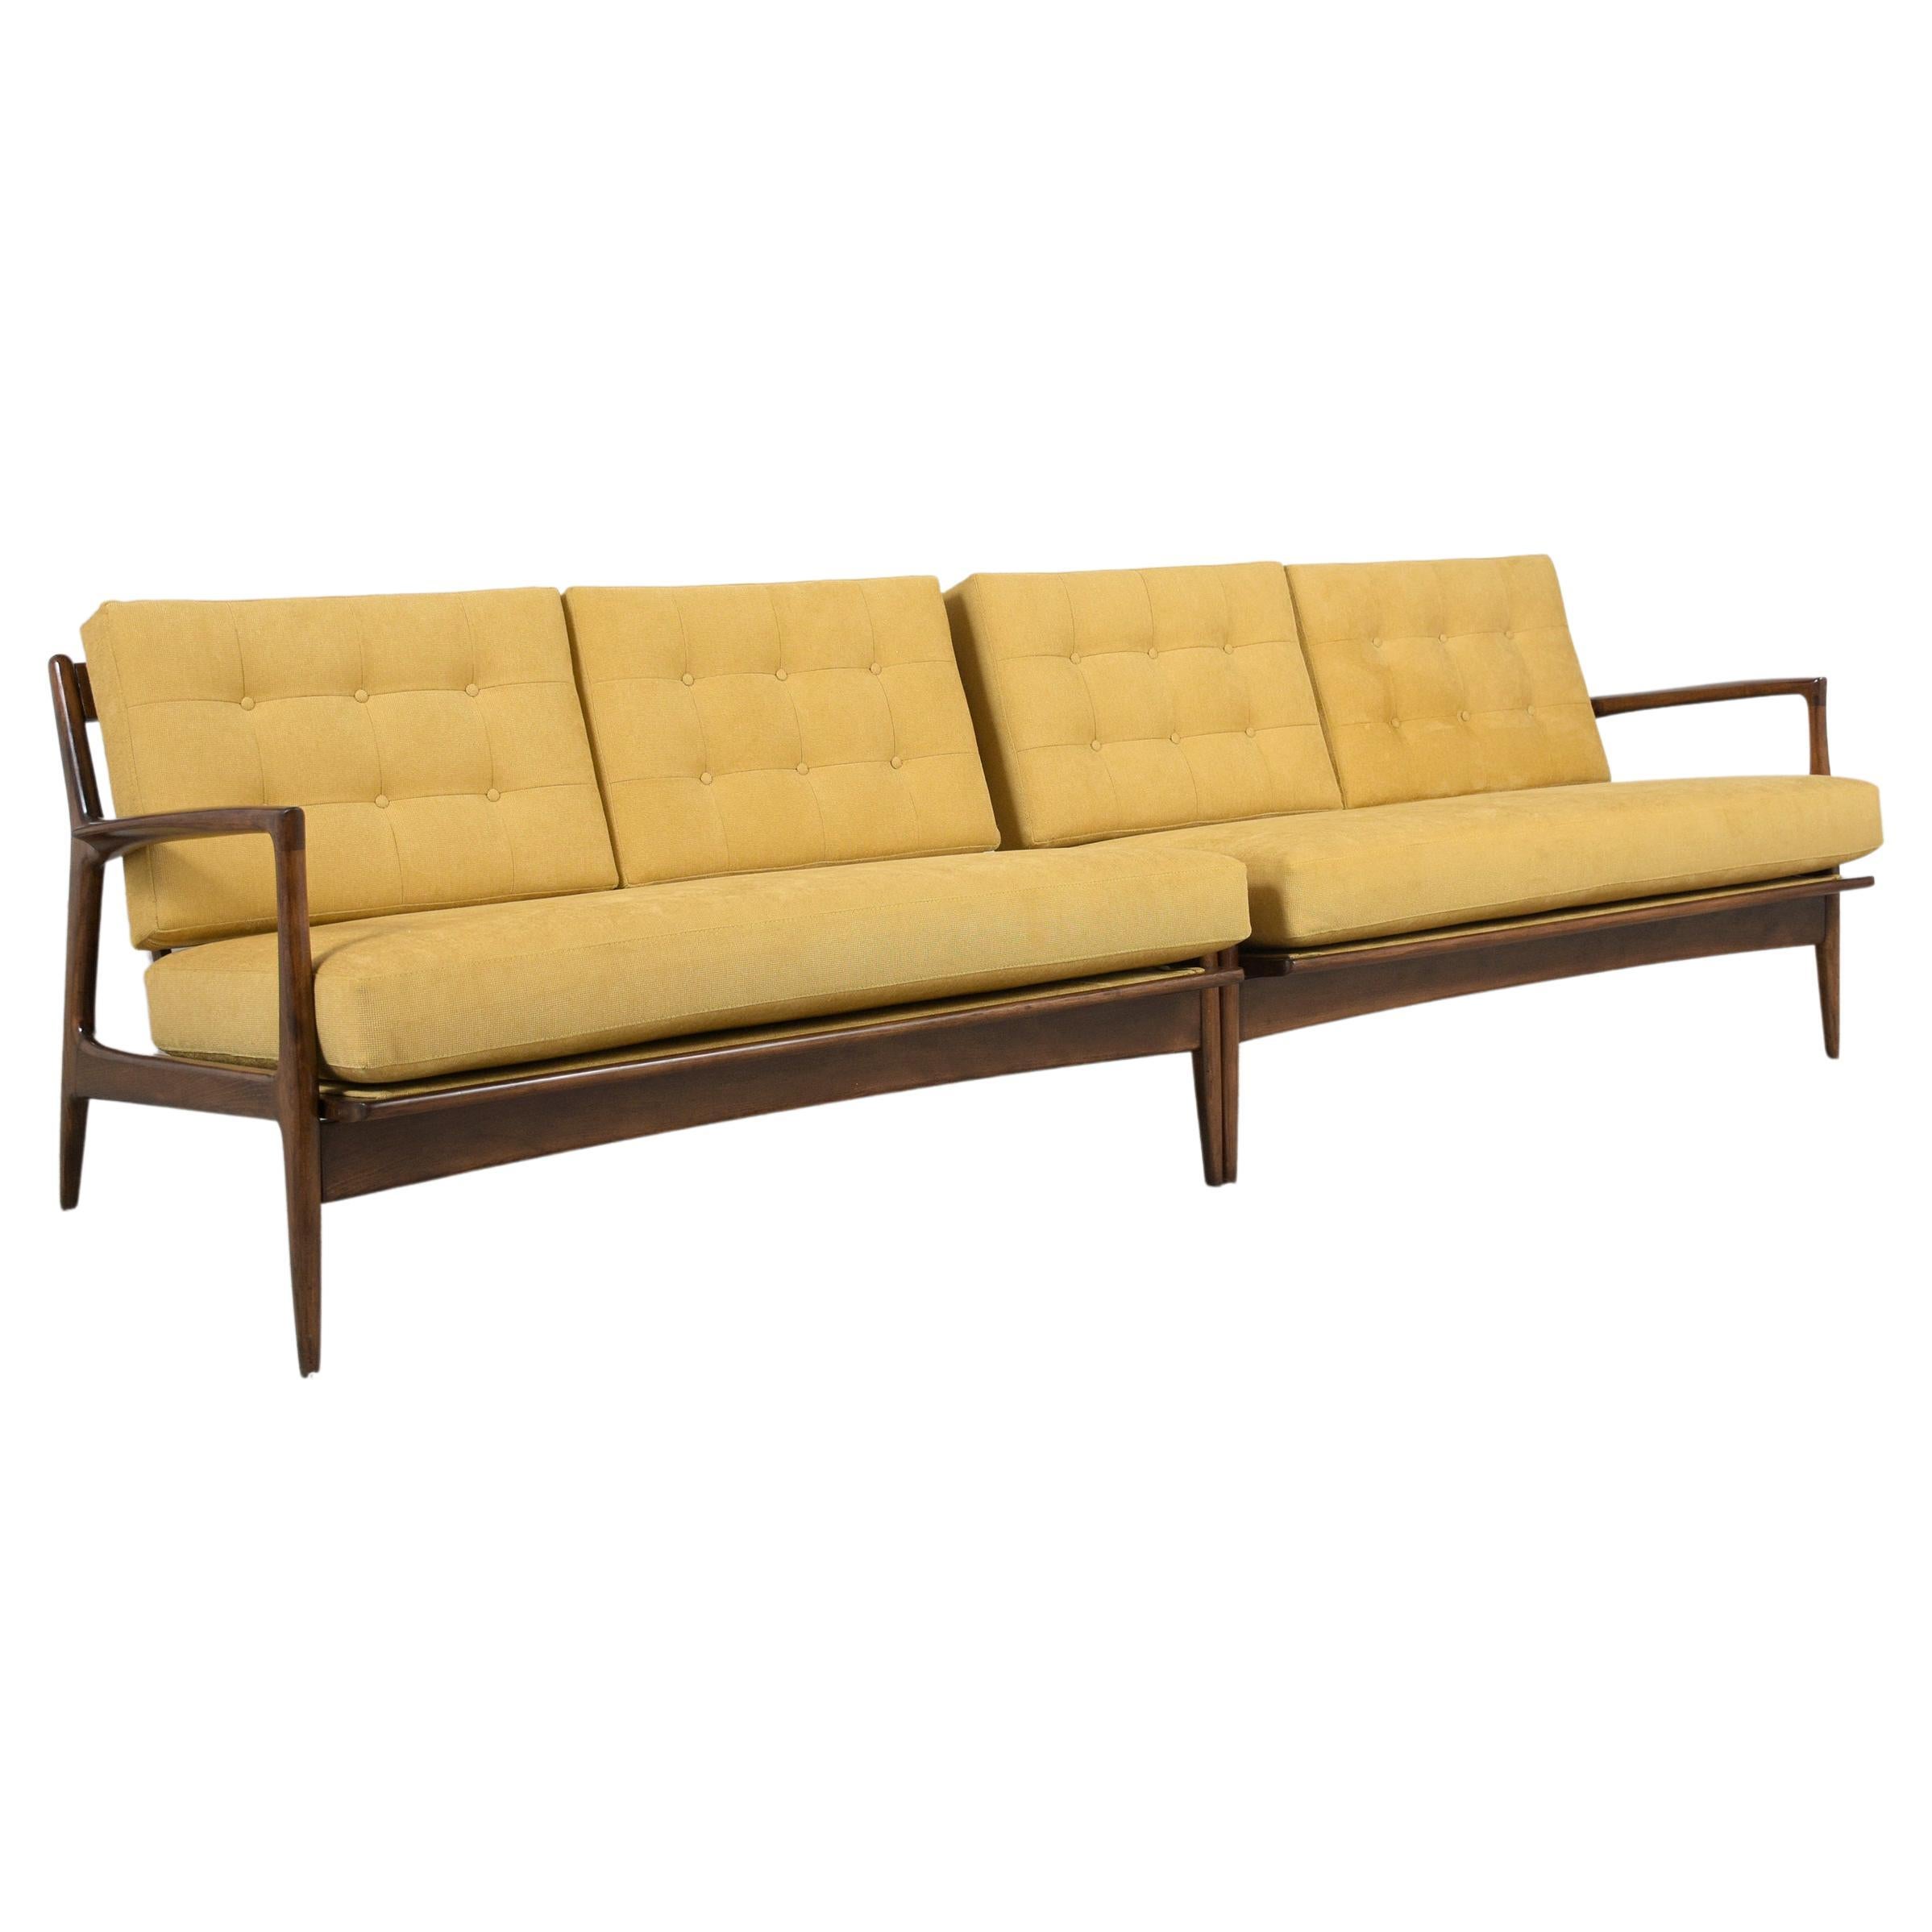 1960s Mid-Century Modern Danish Sectional Sofa